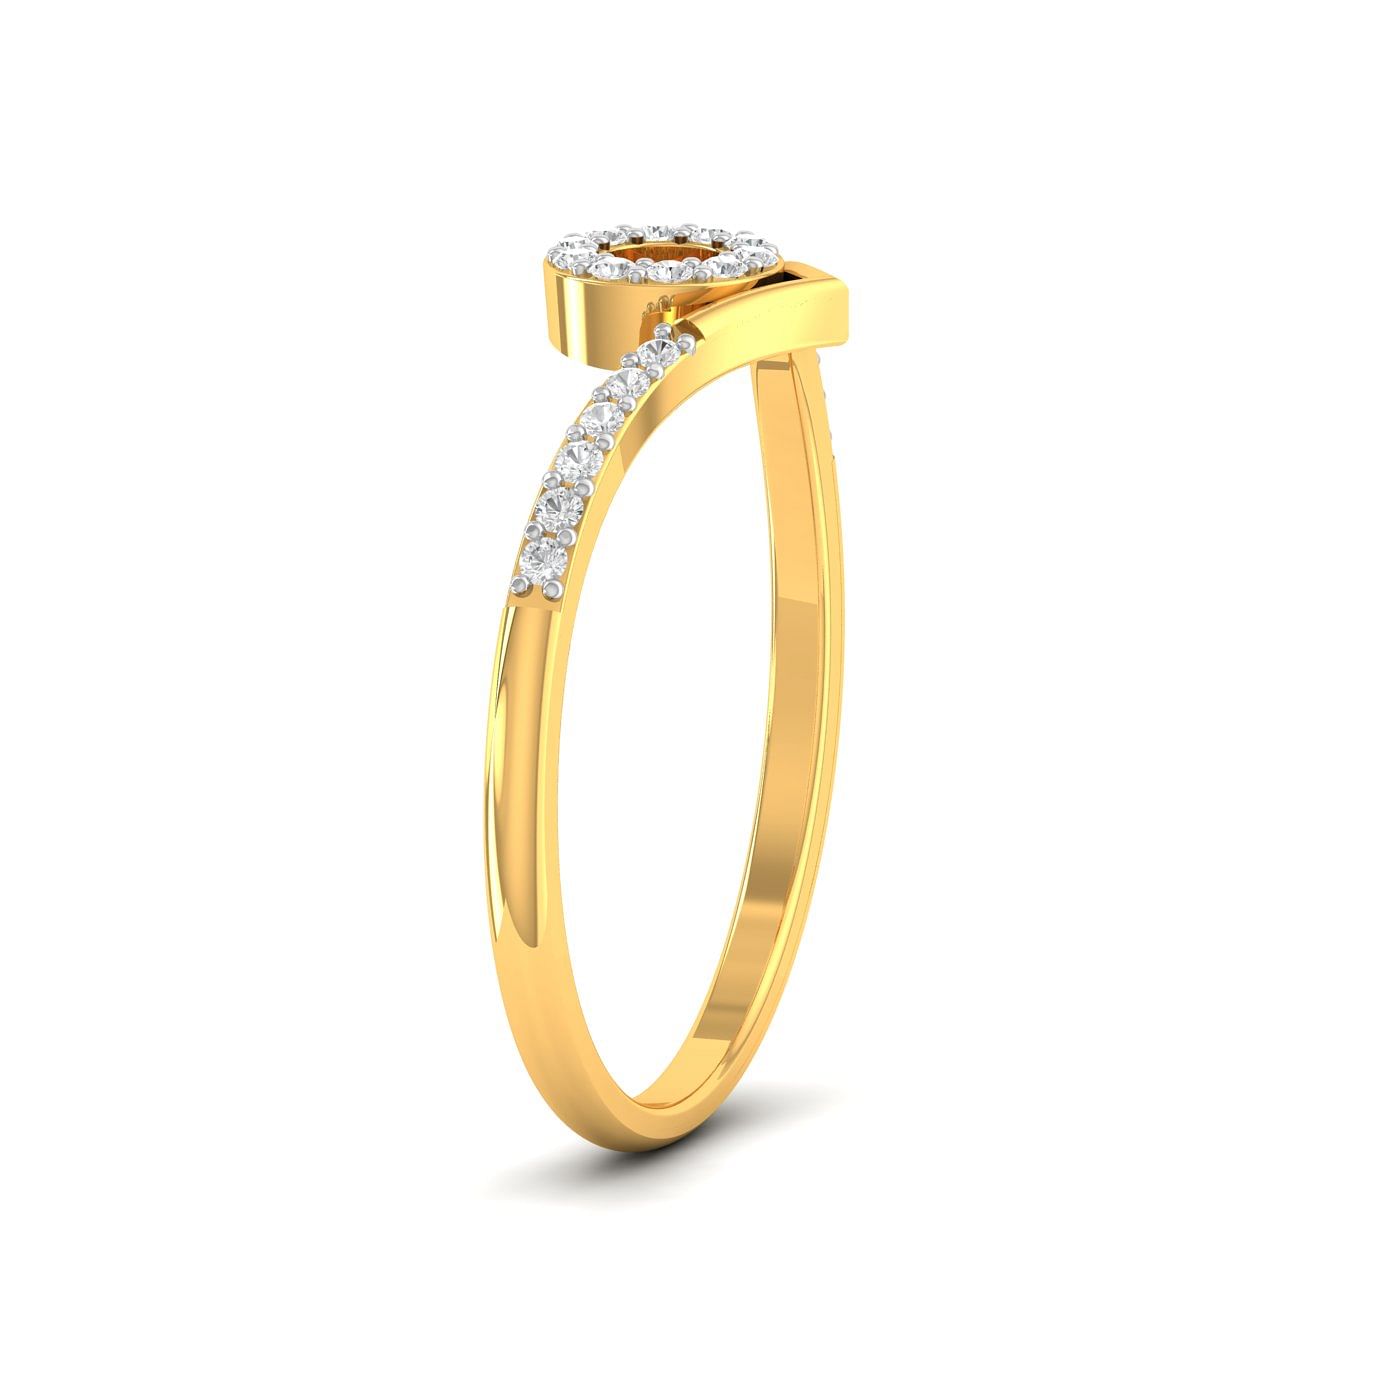 Circulo Diamond Engagement Ring In Yellow Gold Metal